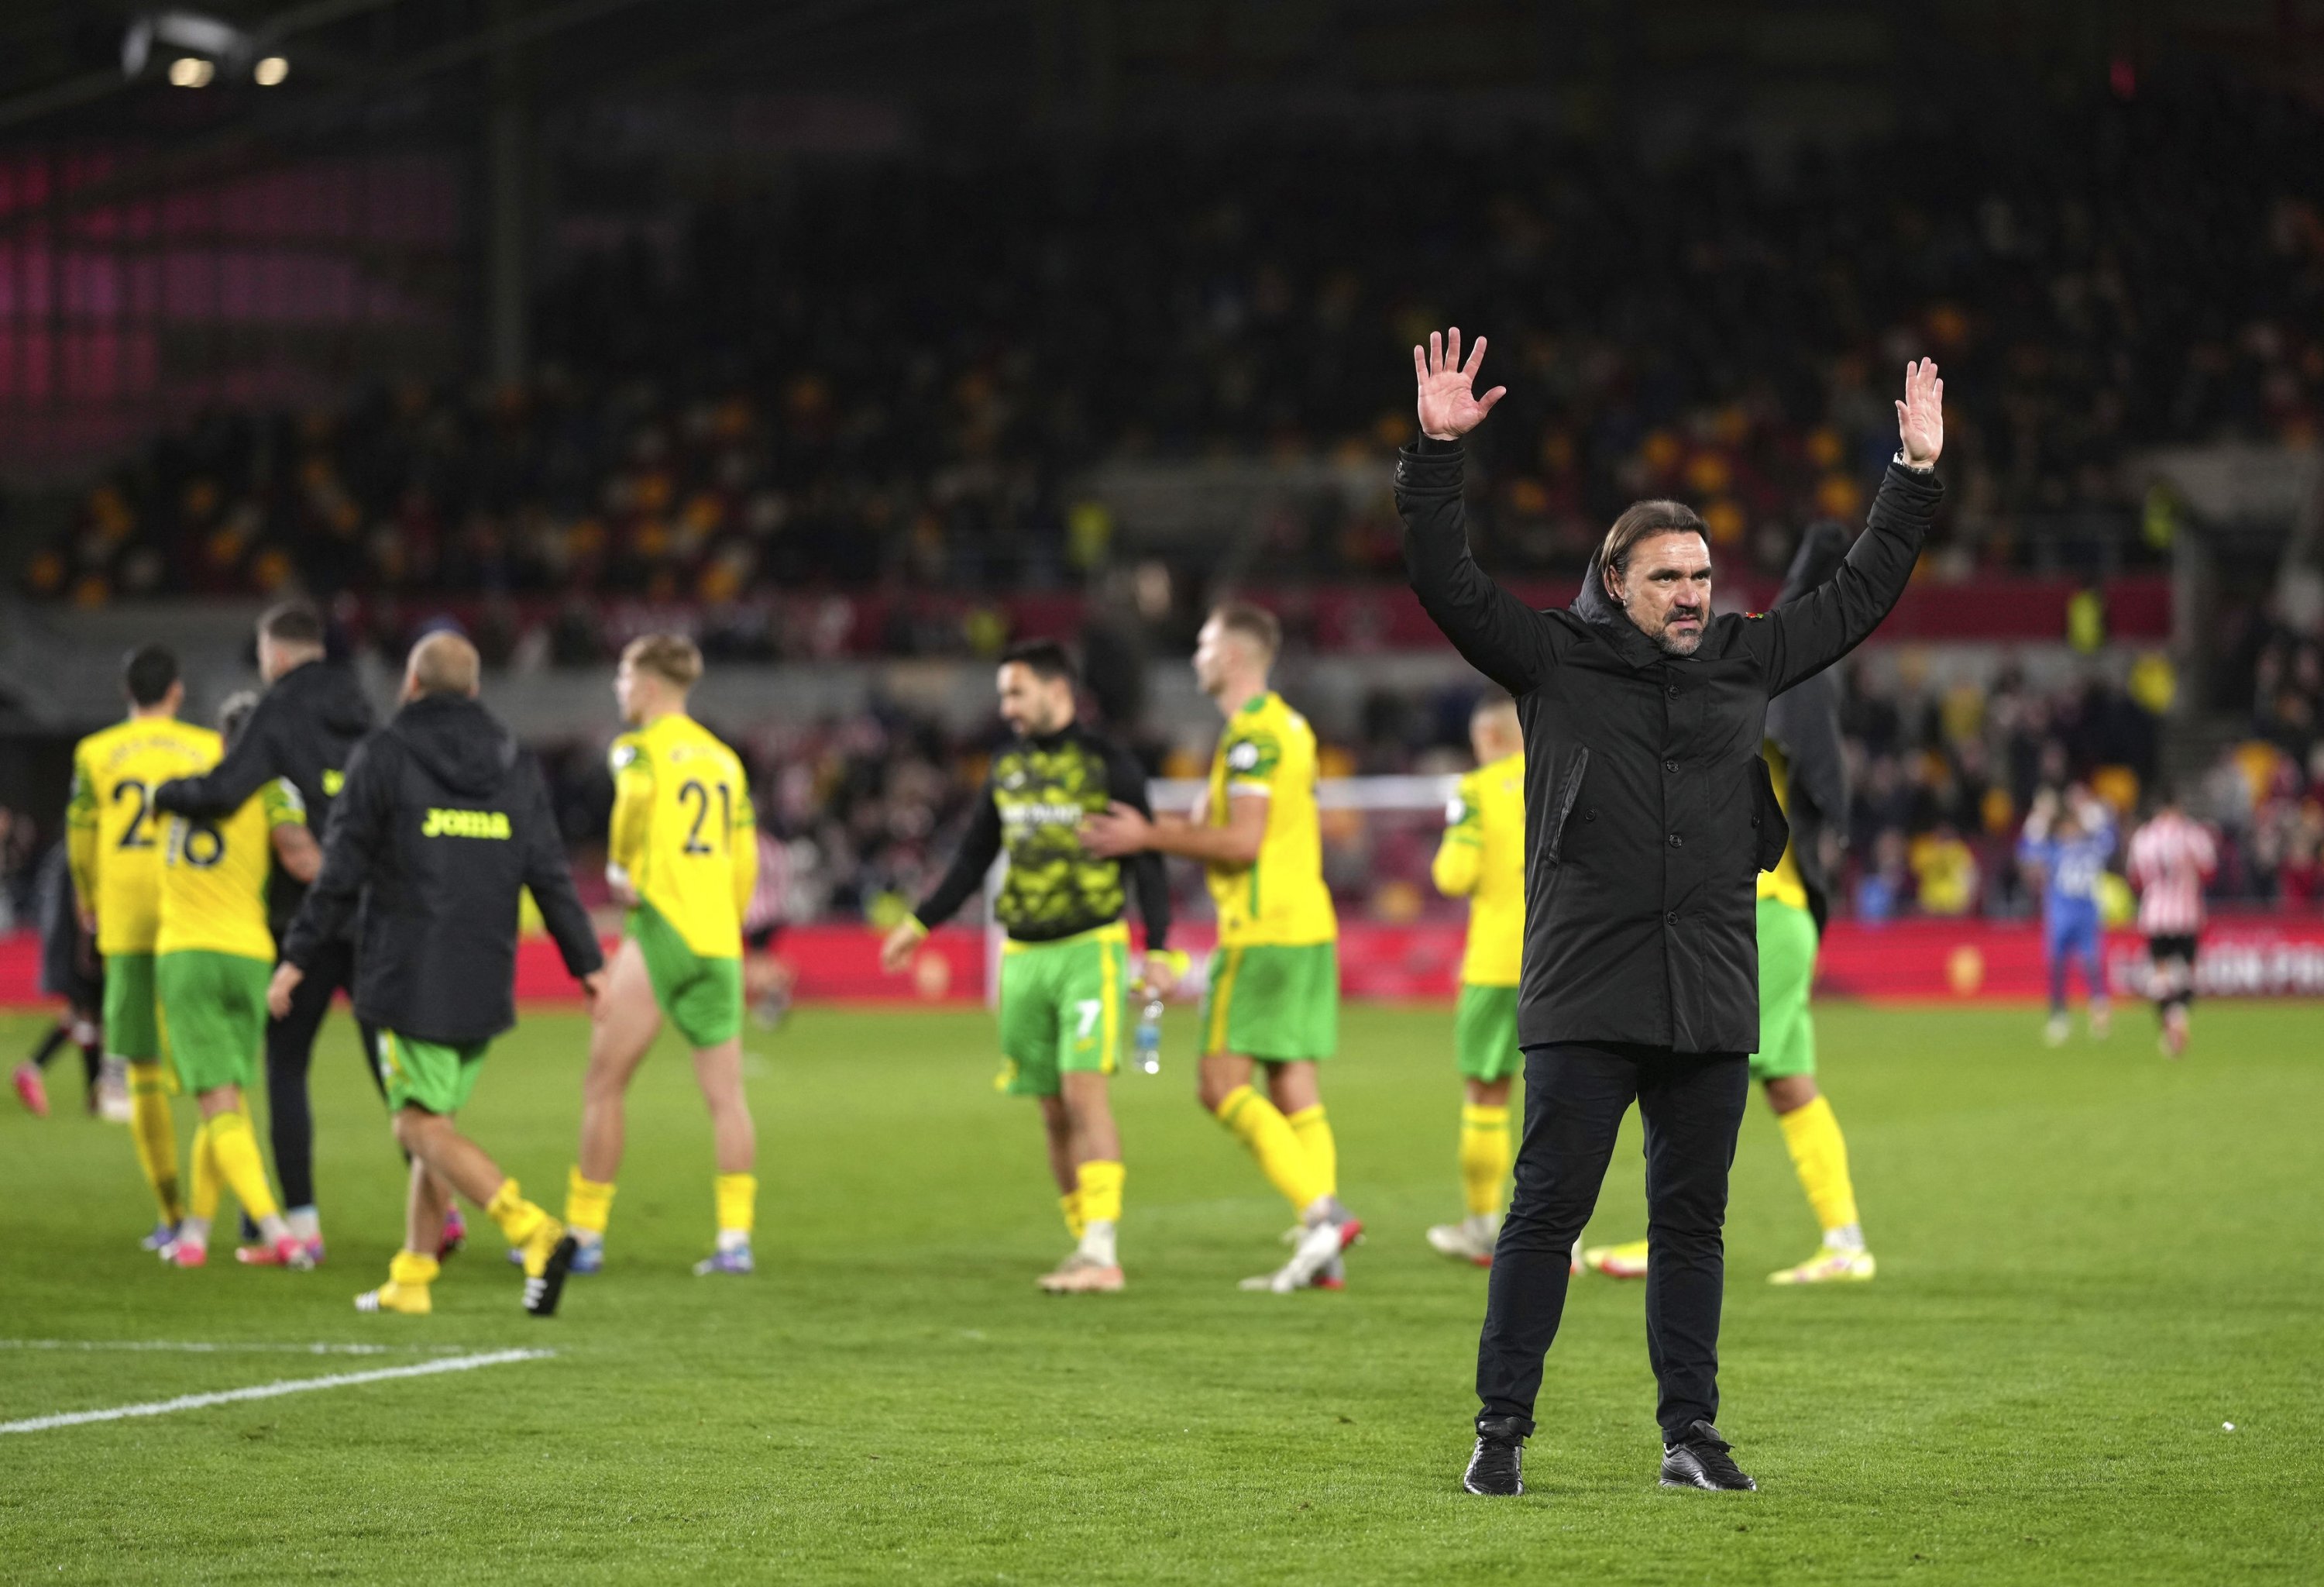 Norwich City manager Daniel Farke salutes the fans after the final whistle of a Premier League match against Brentford, London, England, Nov. 6, 2021. (AP Photo)